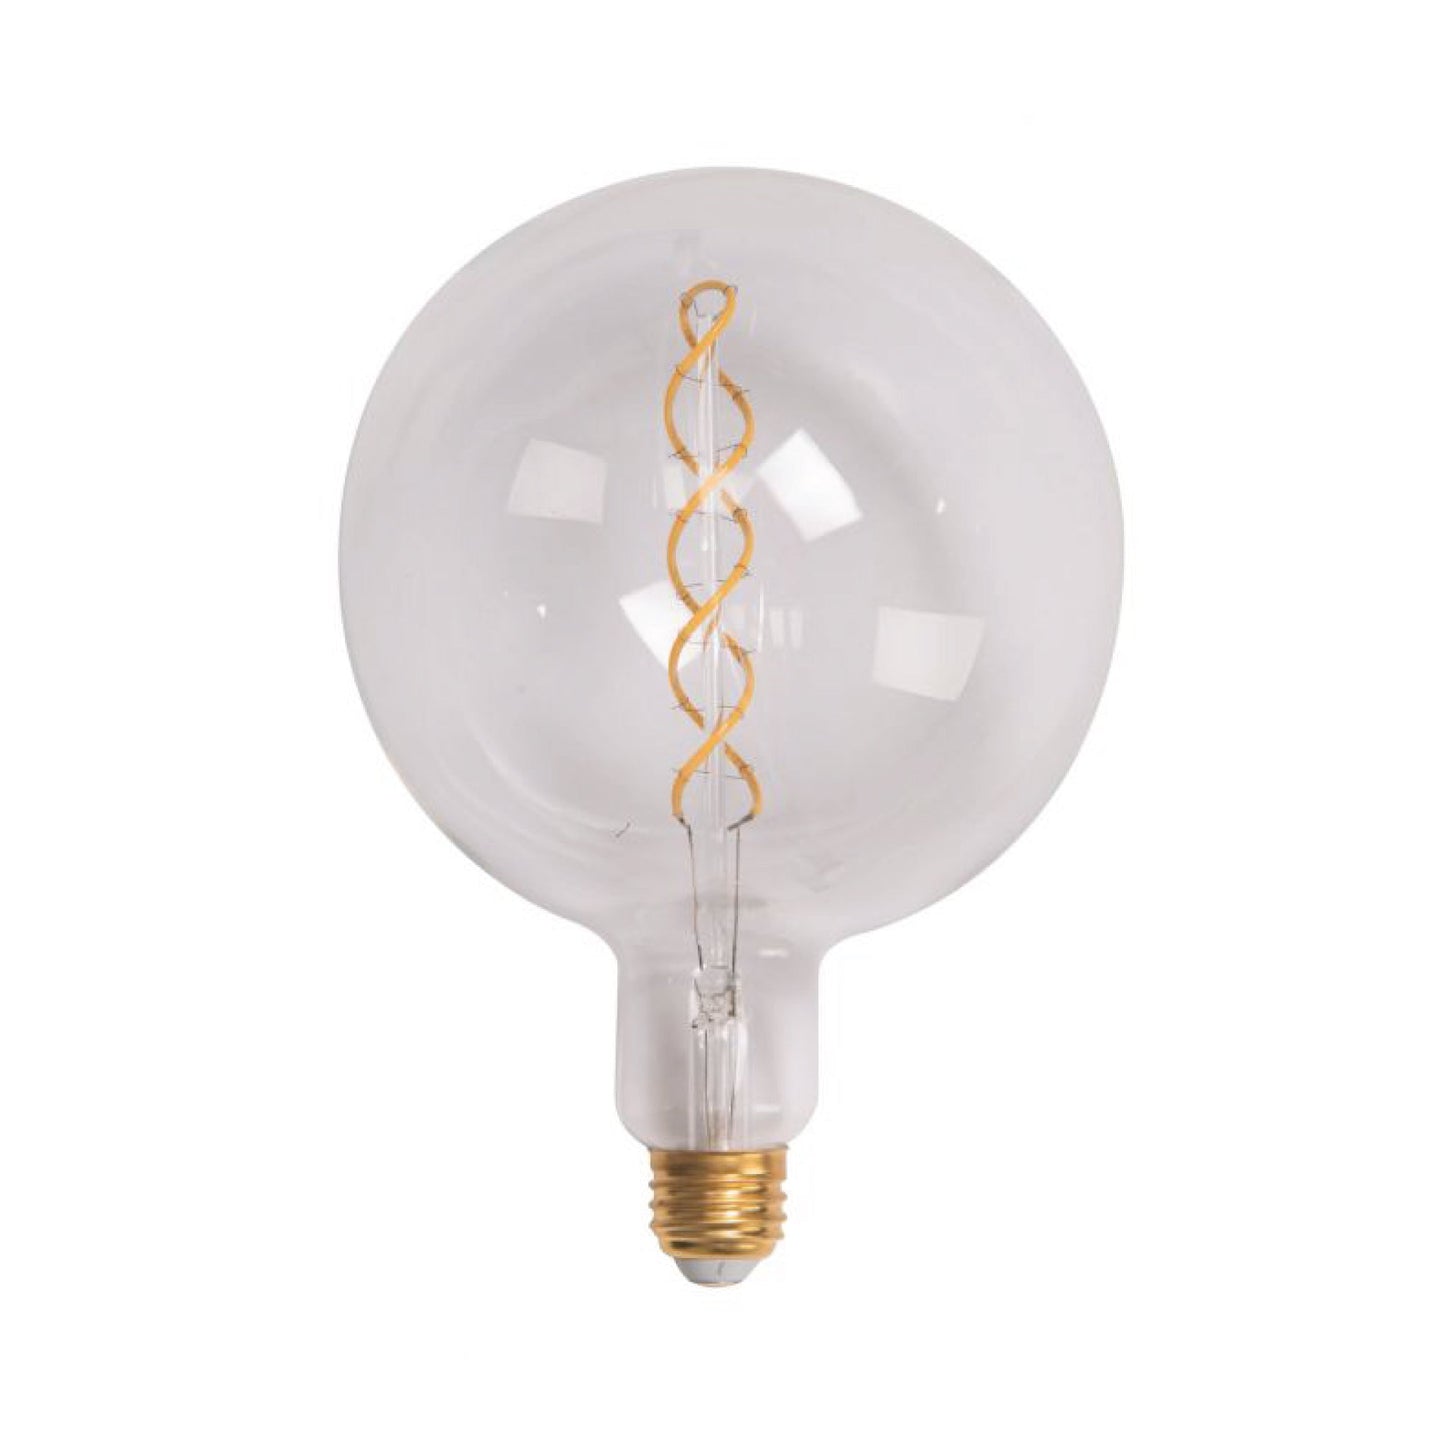 Craftmade 7-Watt G50 Clear Finish, E26 Medium Base, 8.4" M.O.L., 3000K Warm White LED Light Bulb